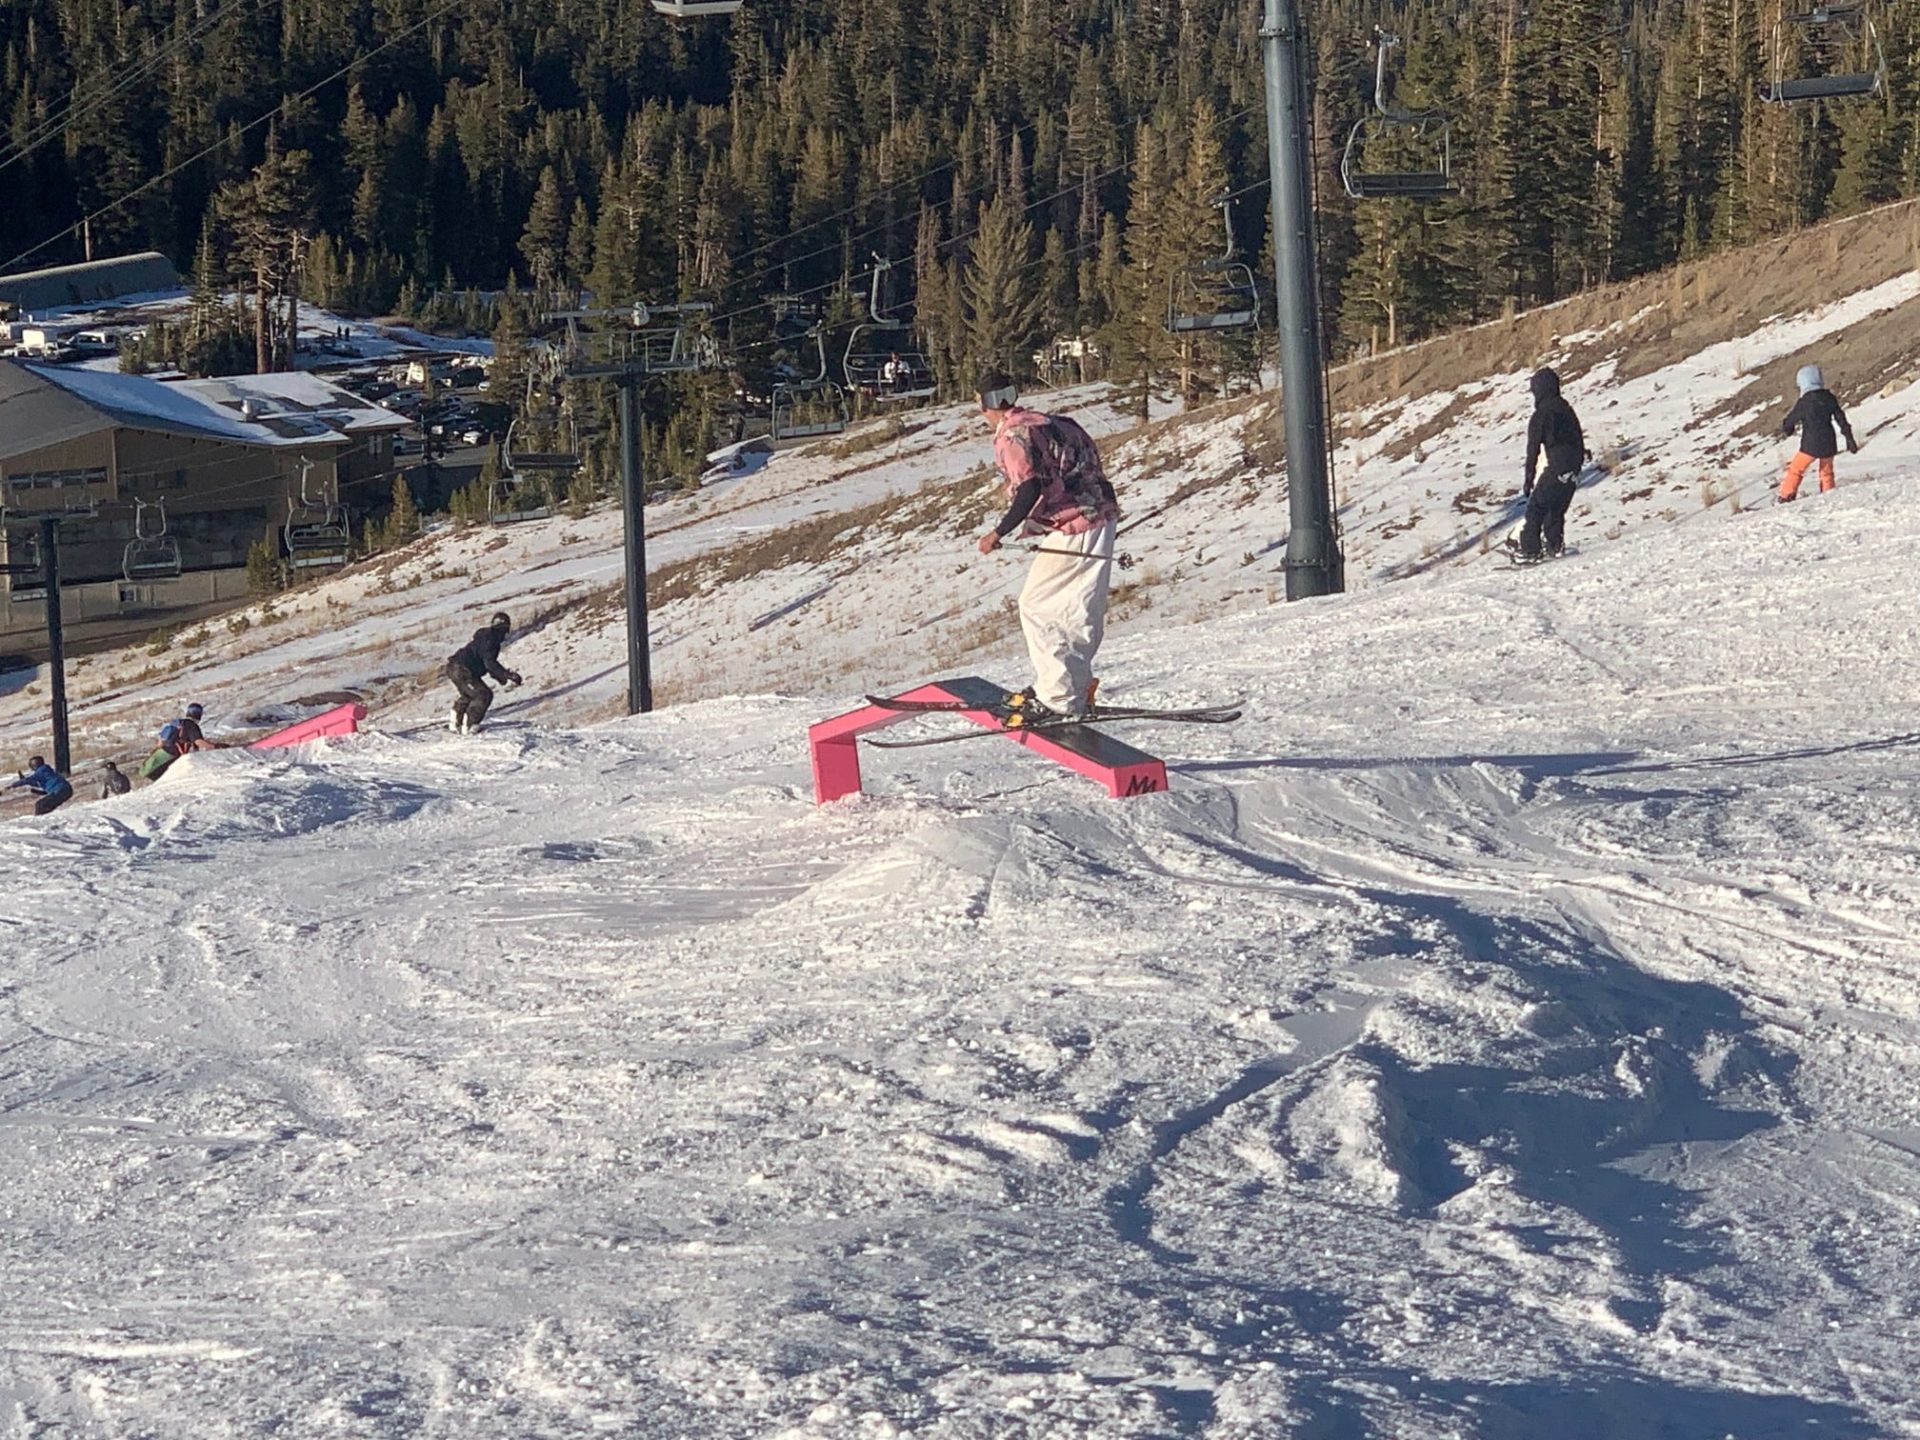 Skier slides an up down rail at Mammoth, CA.